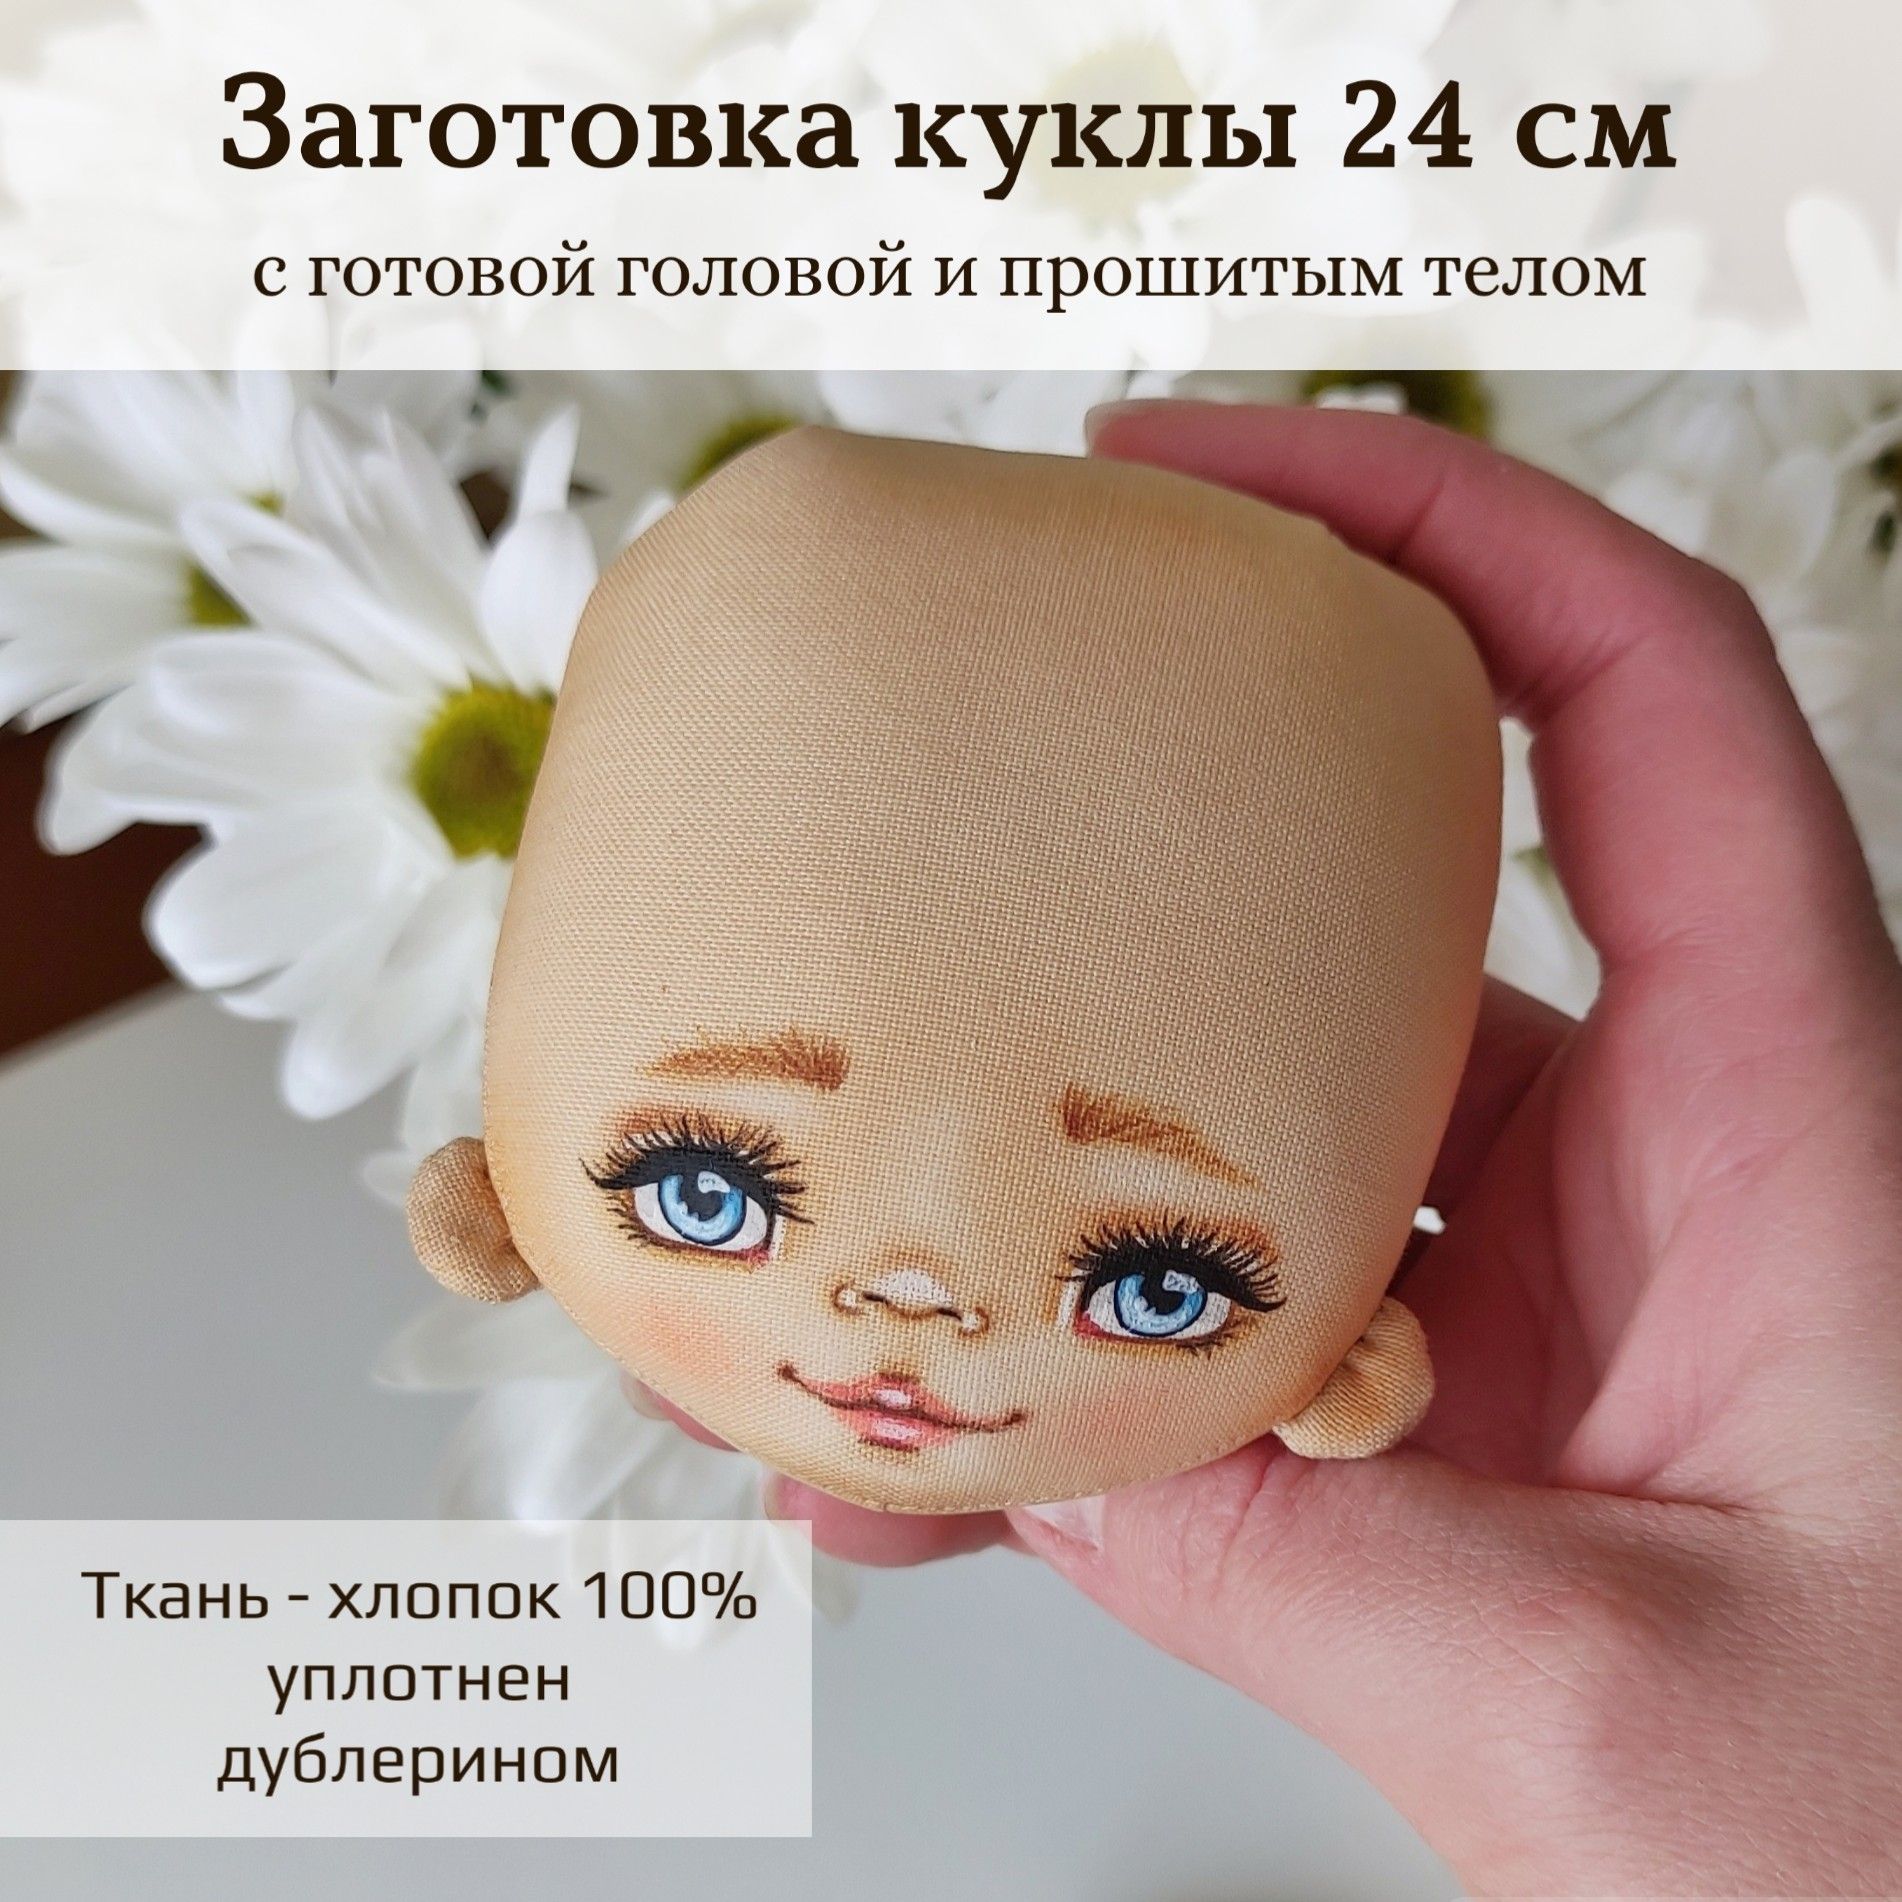 Мастер-класс: как пришить голову кукле :: fialkaart.ru